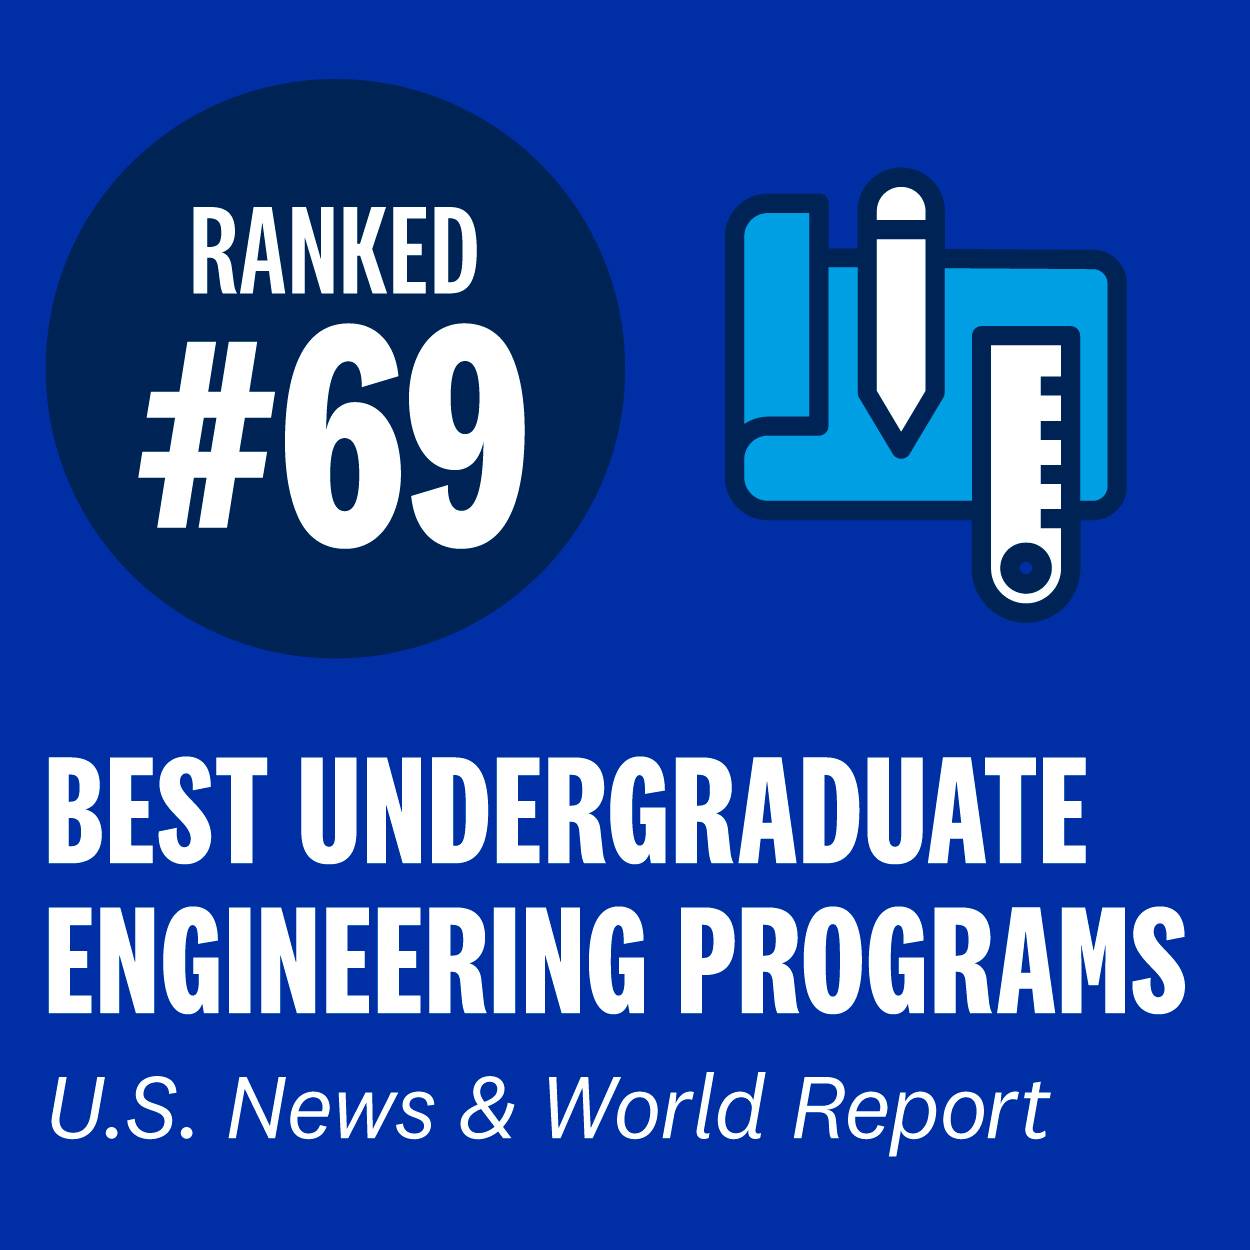 Ranked #69 in Best Undergraduate Engineering Programs by U.S. News & World Report